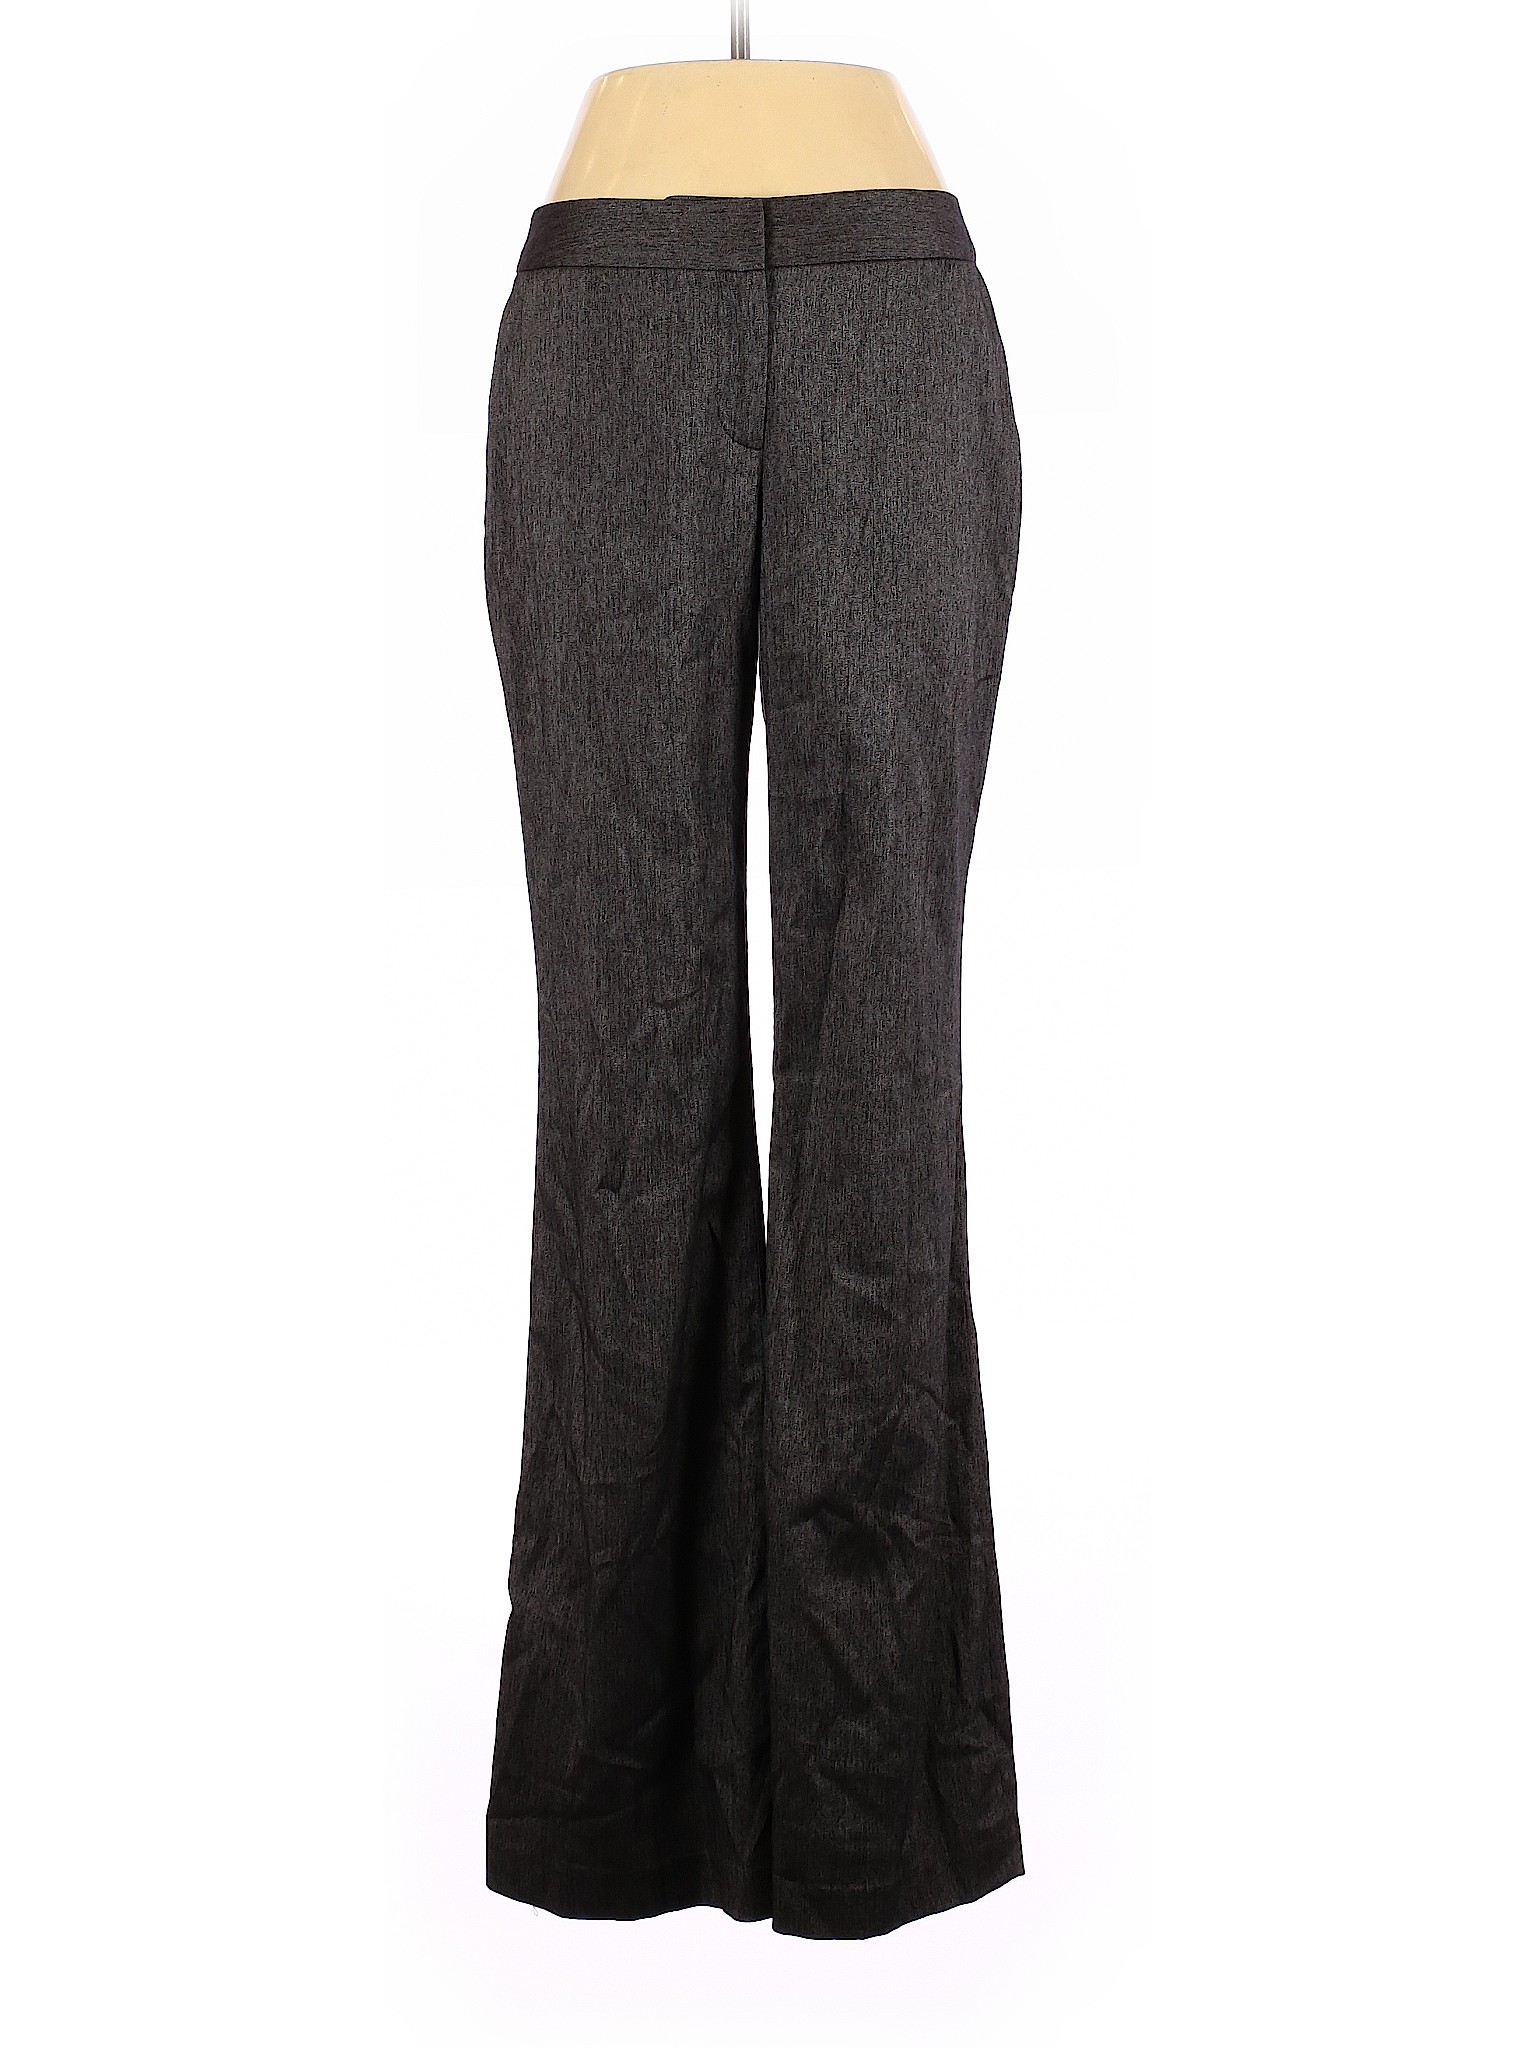 Tahari Women Black Dress Pants 0 | eBay